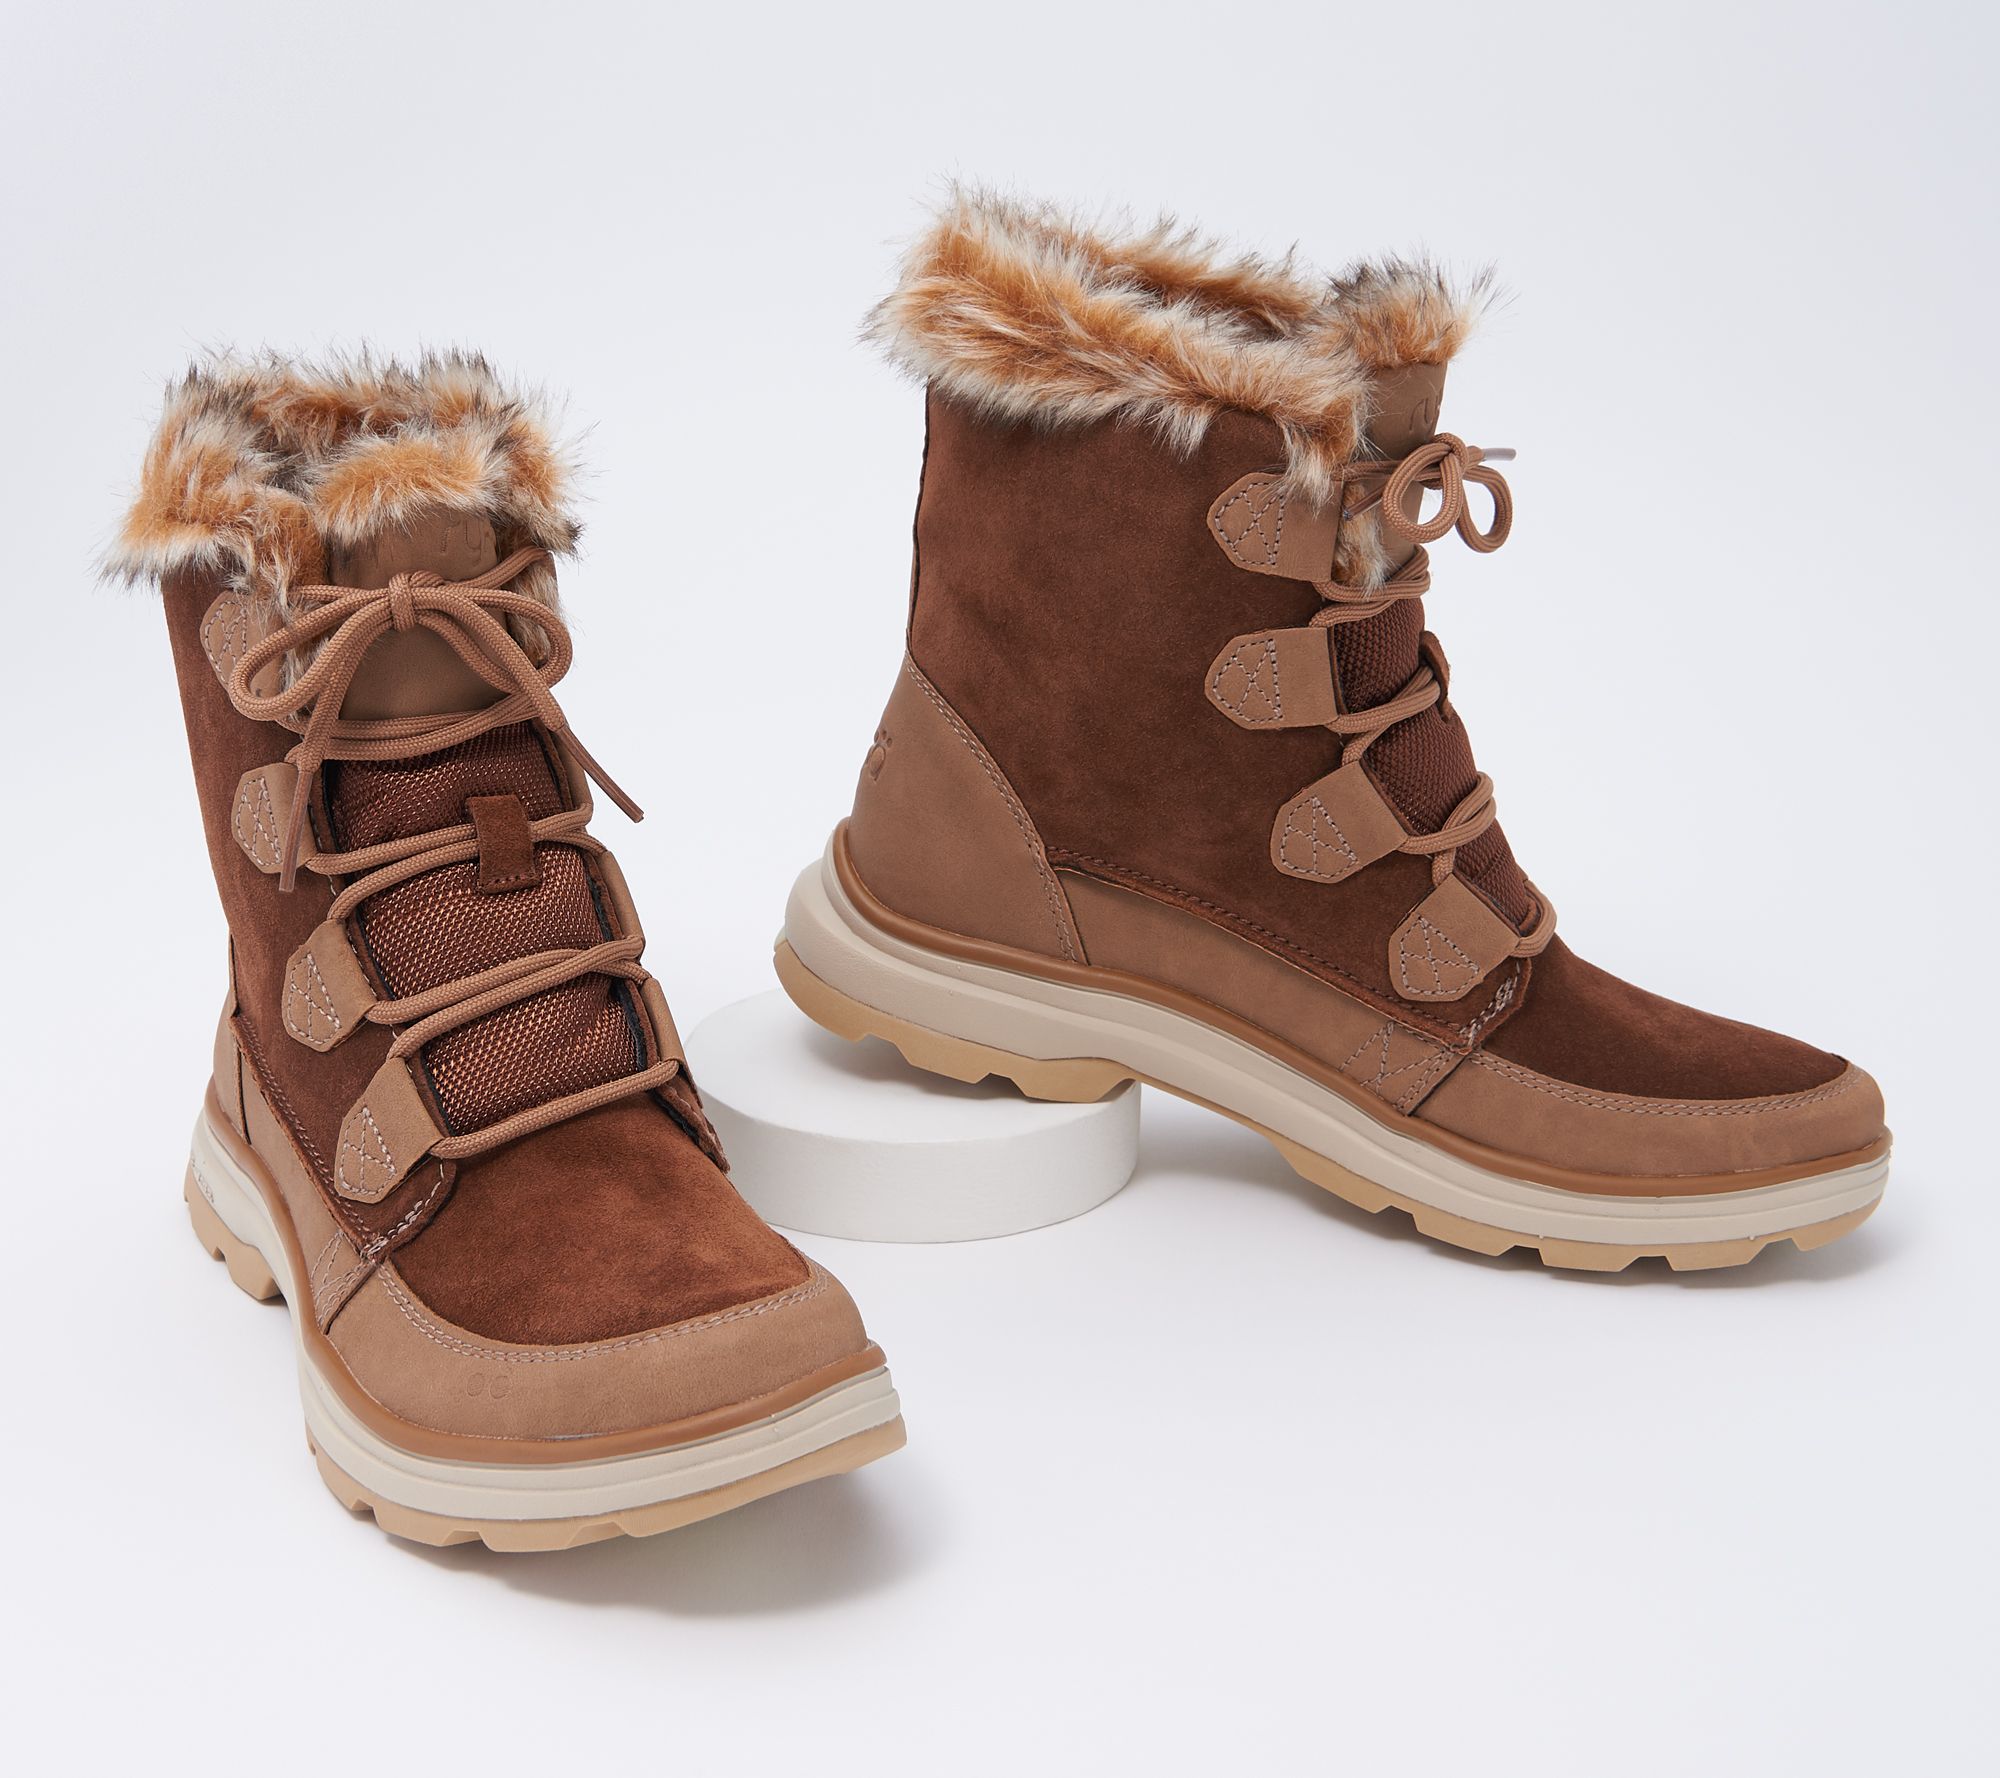 qvc women's winter boots